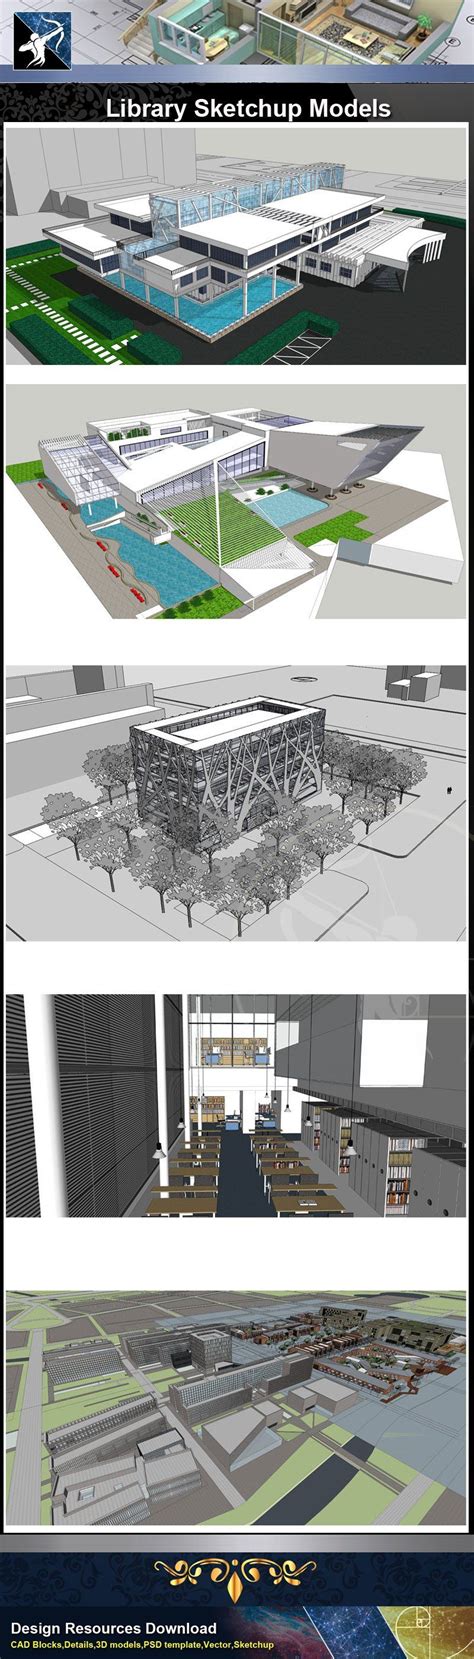 ★sketchup 3d Models 15 Types Of Library Sketchup Models Construction